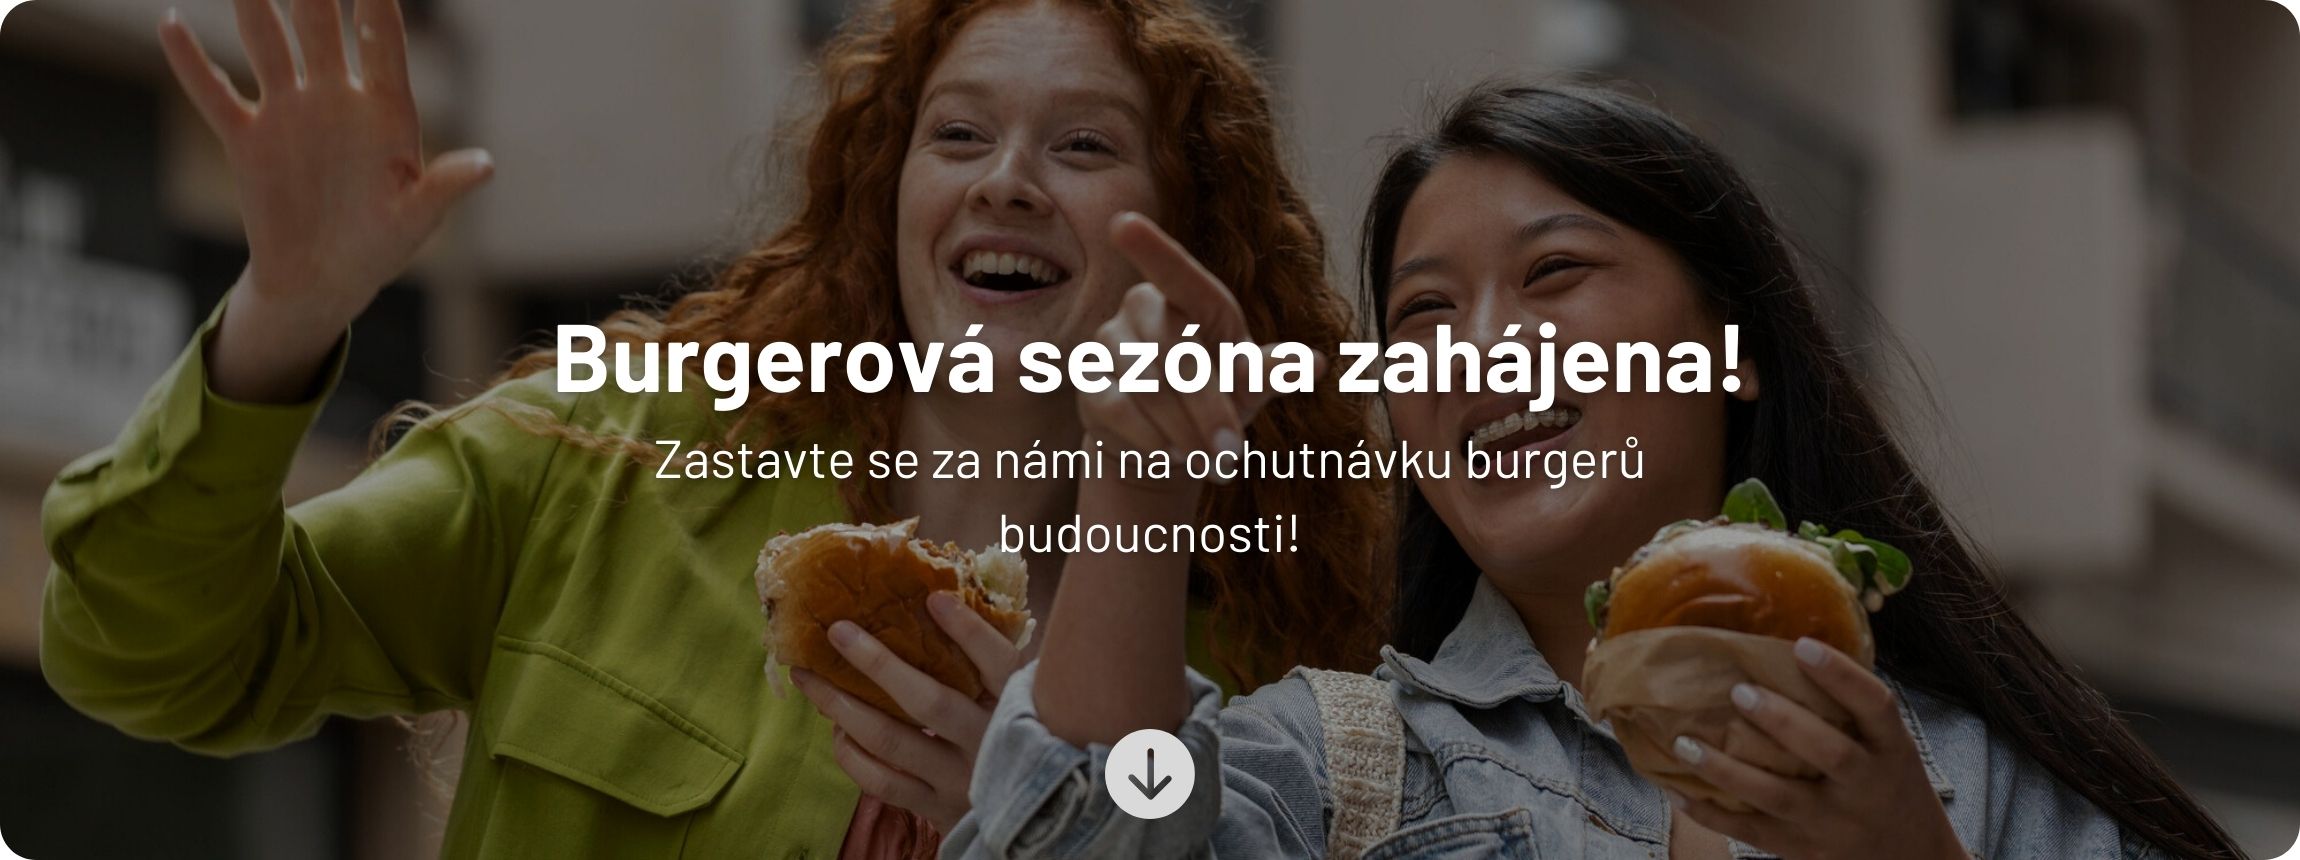 grig-blog-banner-burger-z-hmyzu-burgerfestivaly-jedly-hmyz-min (1)